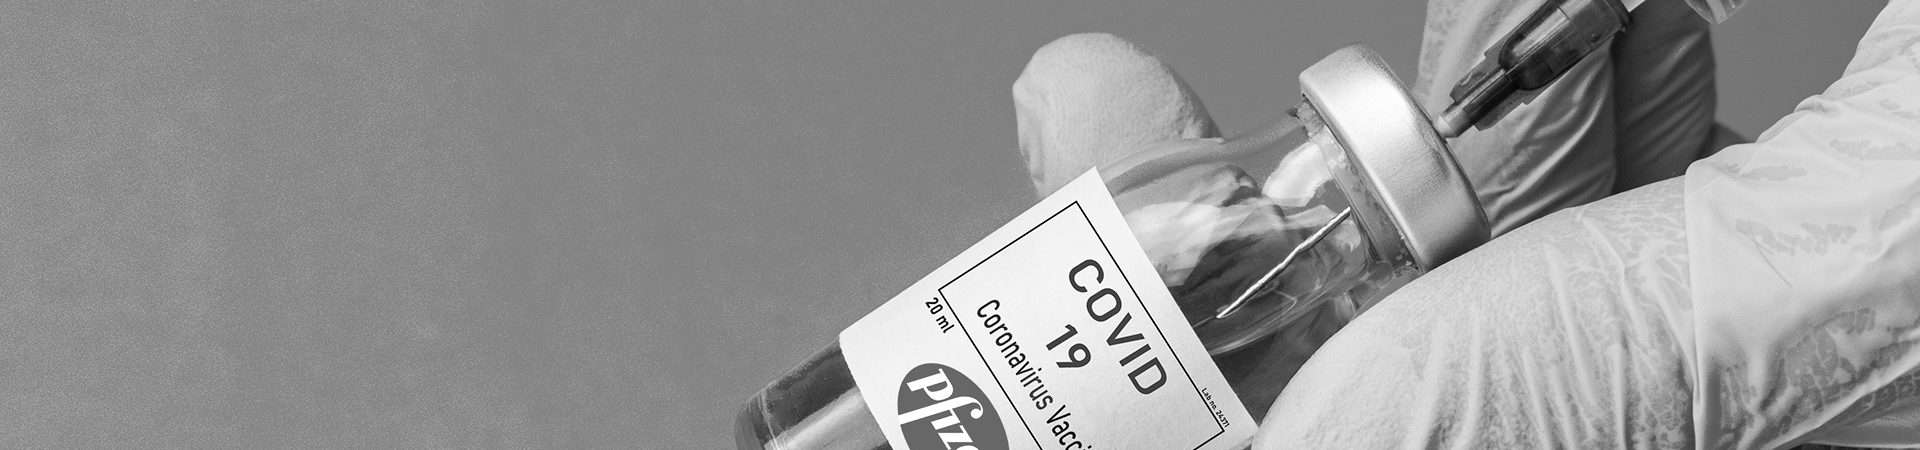 vacina-pfizer-covid-19-1920x450